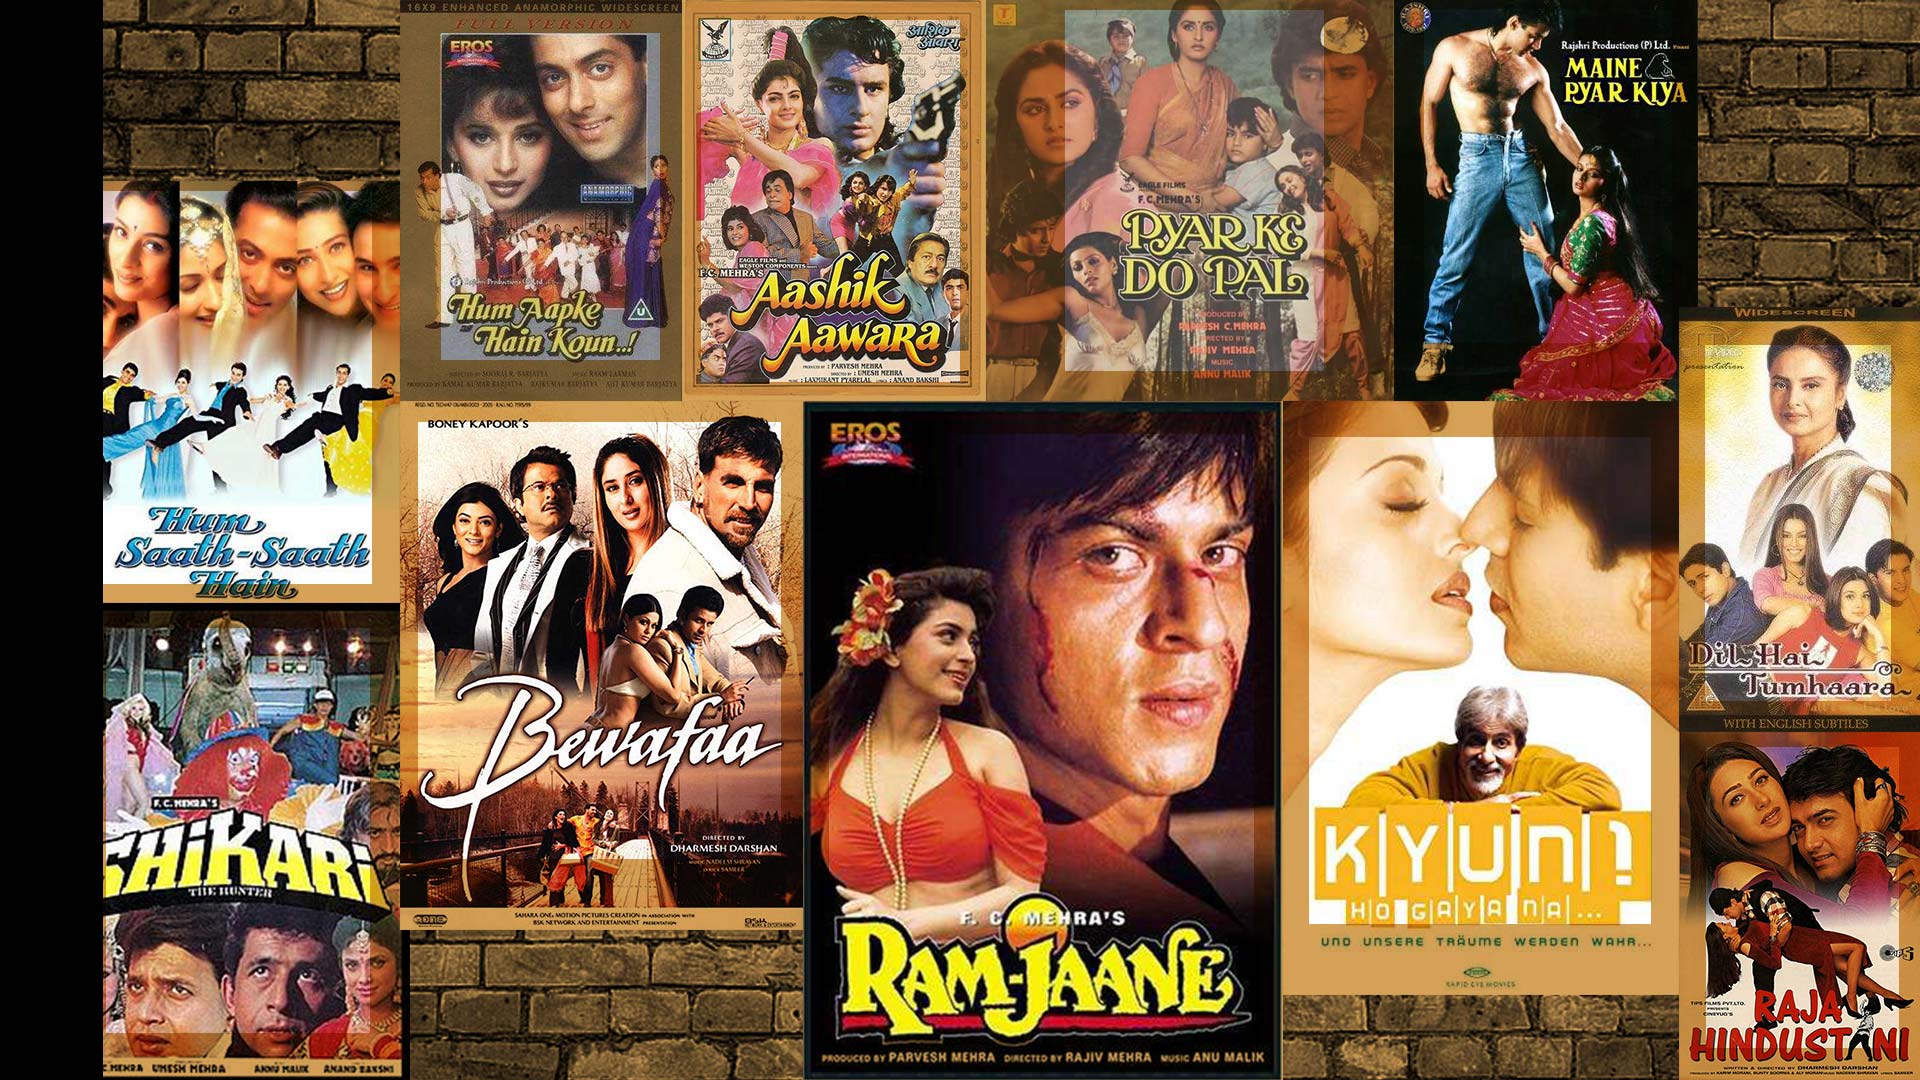 DVDPlay website 2021 - Tamil, Telugu, Malayalam, Kannada Movies download- is it legal?